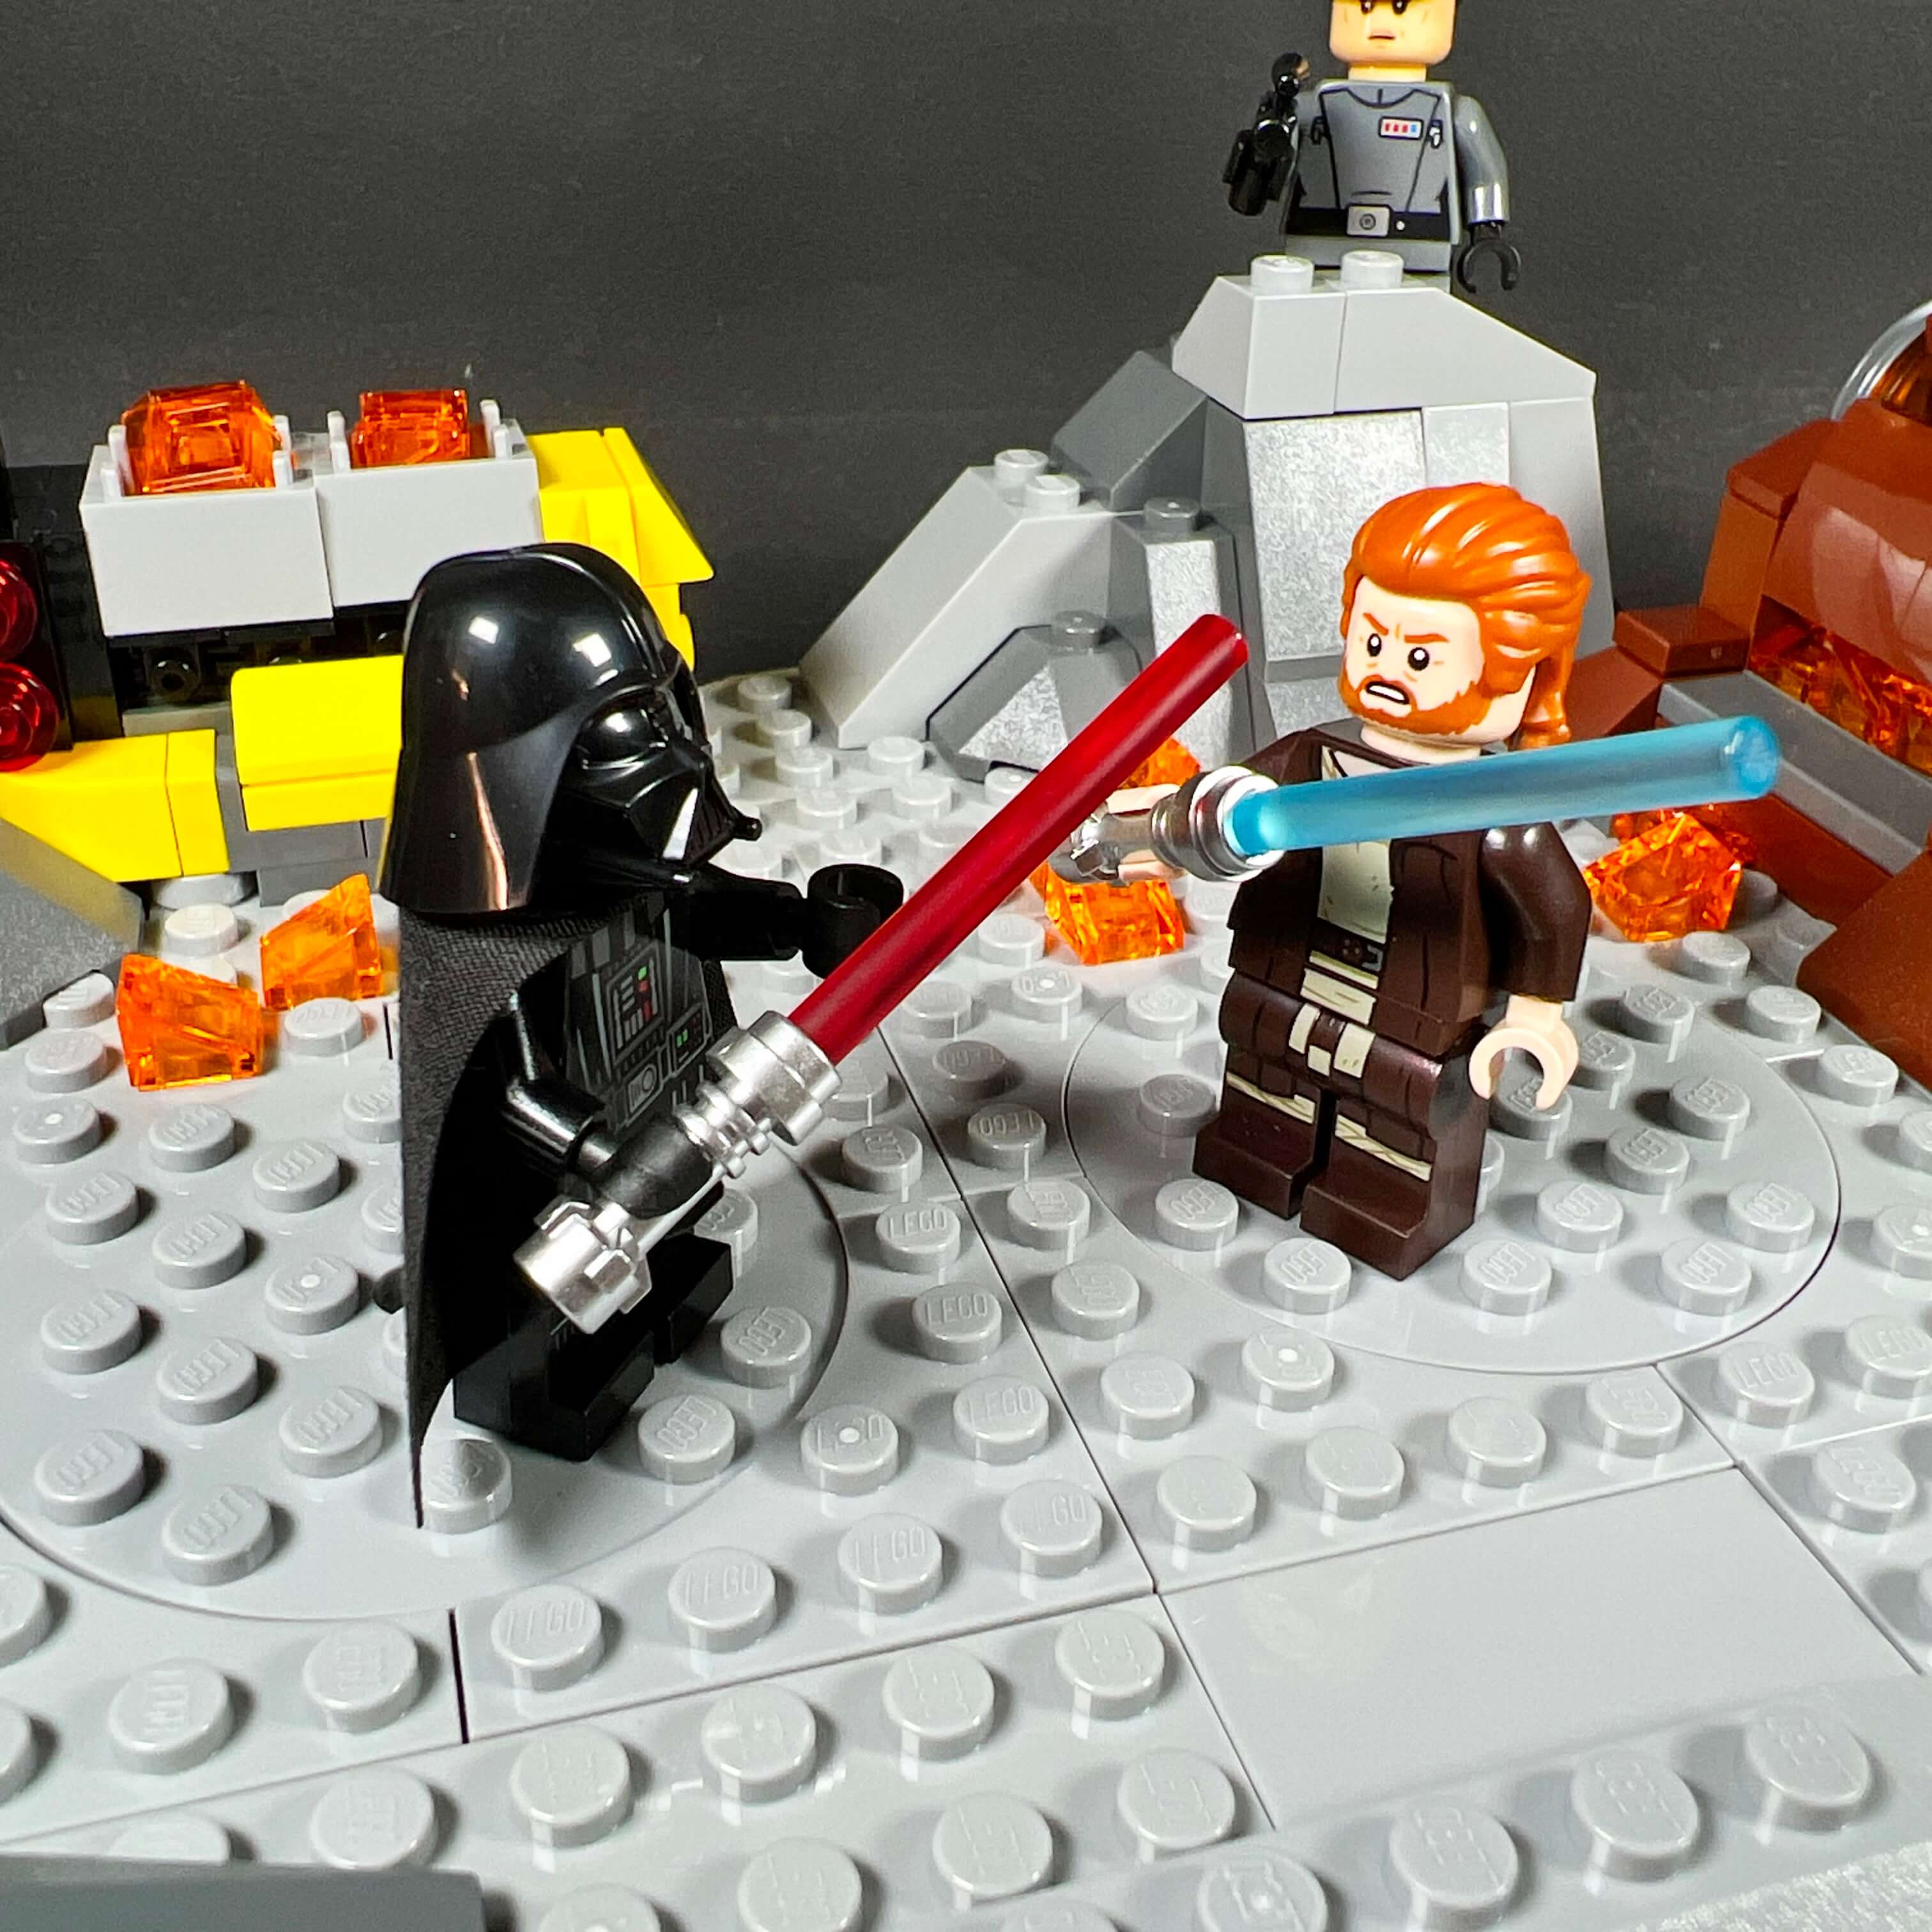 LEGO 75334 Obi-Wan Kenobi™ contre Dark Vador